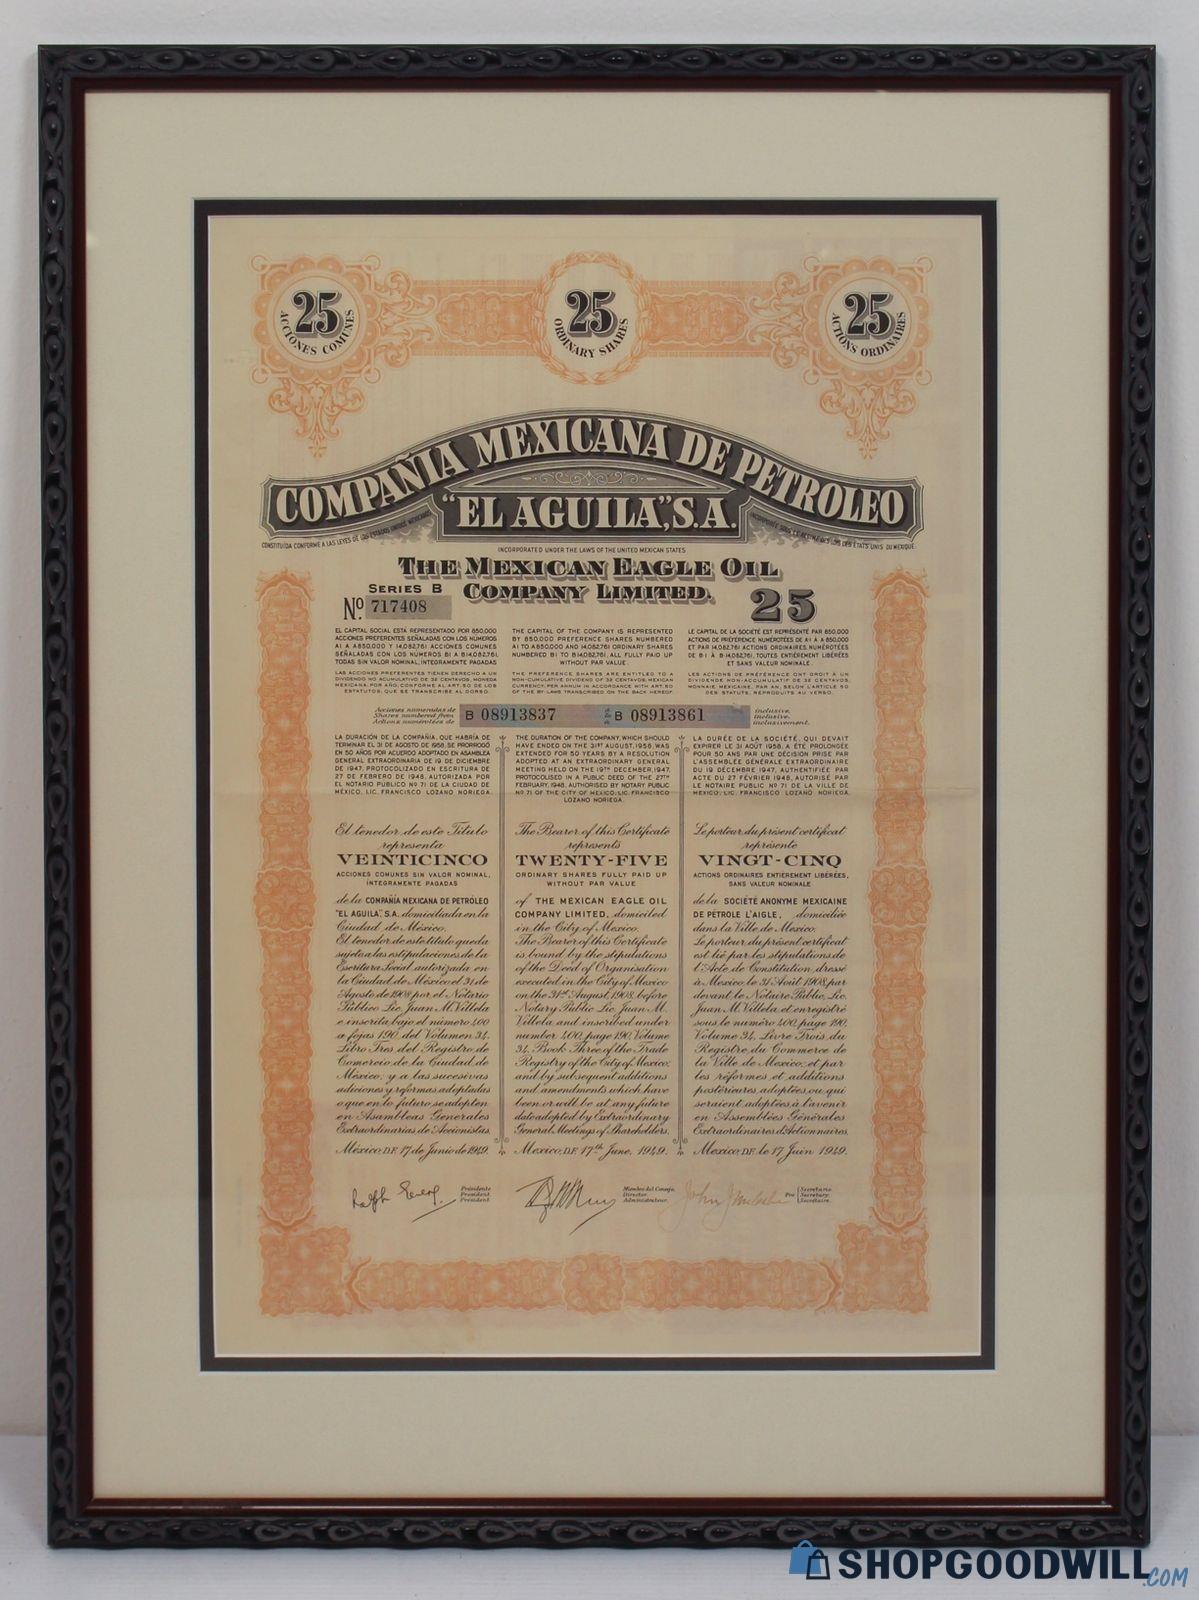 Antique Print Ephemera Framed Stock Certificate shopgoodwill com